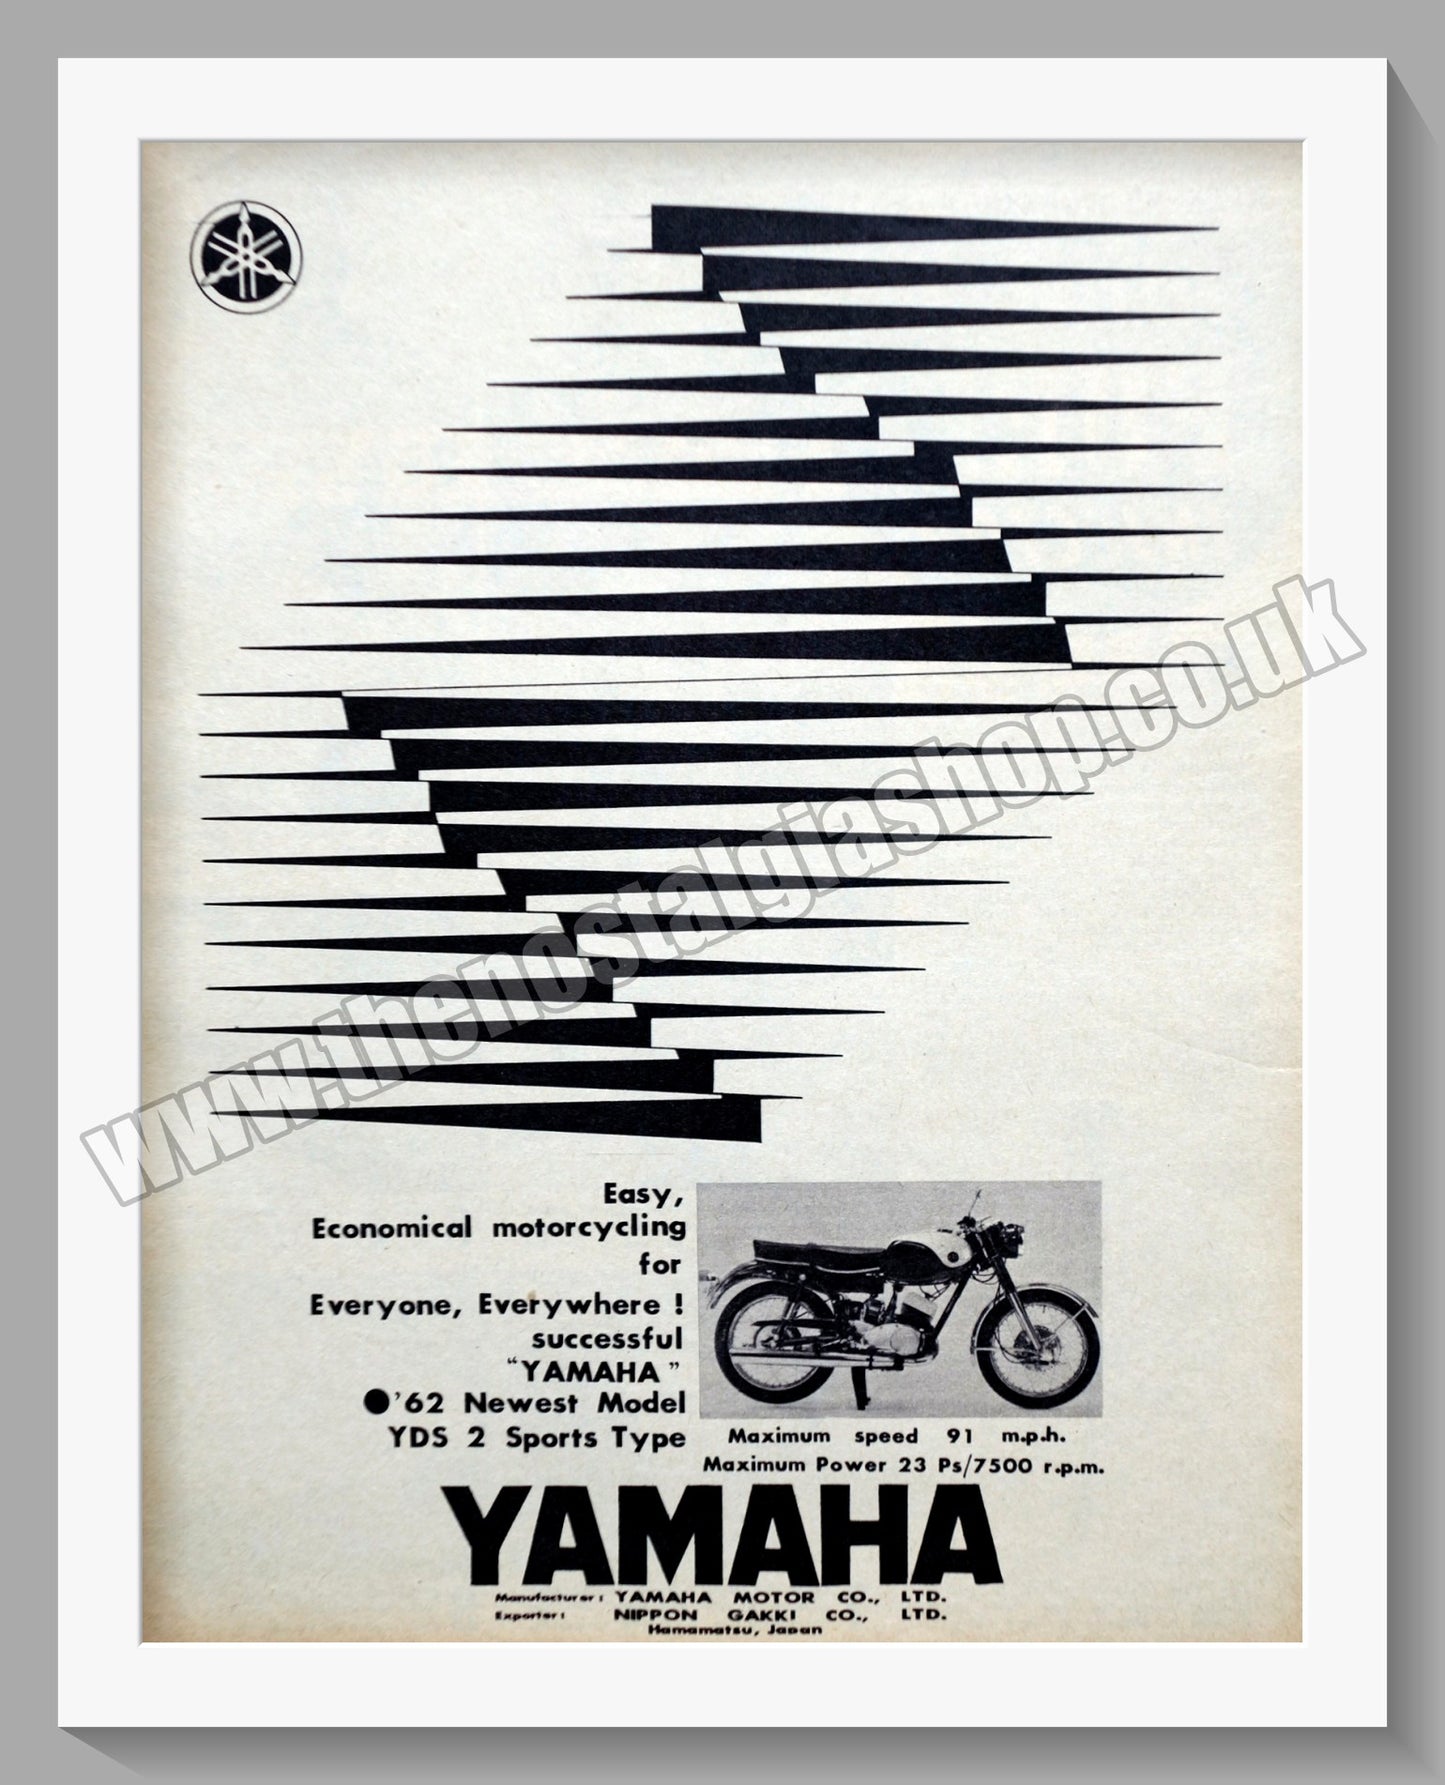 Yamaha YDS 2 Sports Type Motorcycle. Original Advert 1962 (ref AD57857)